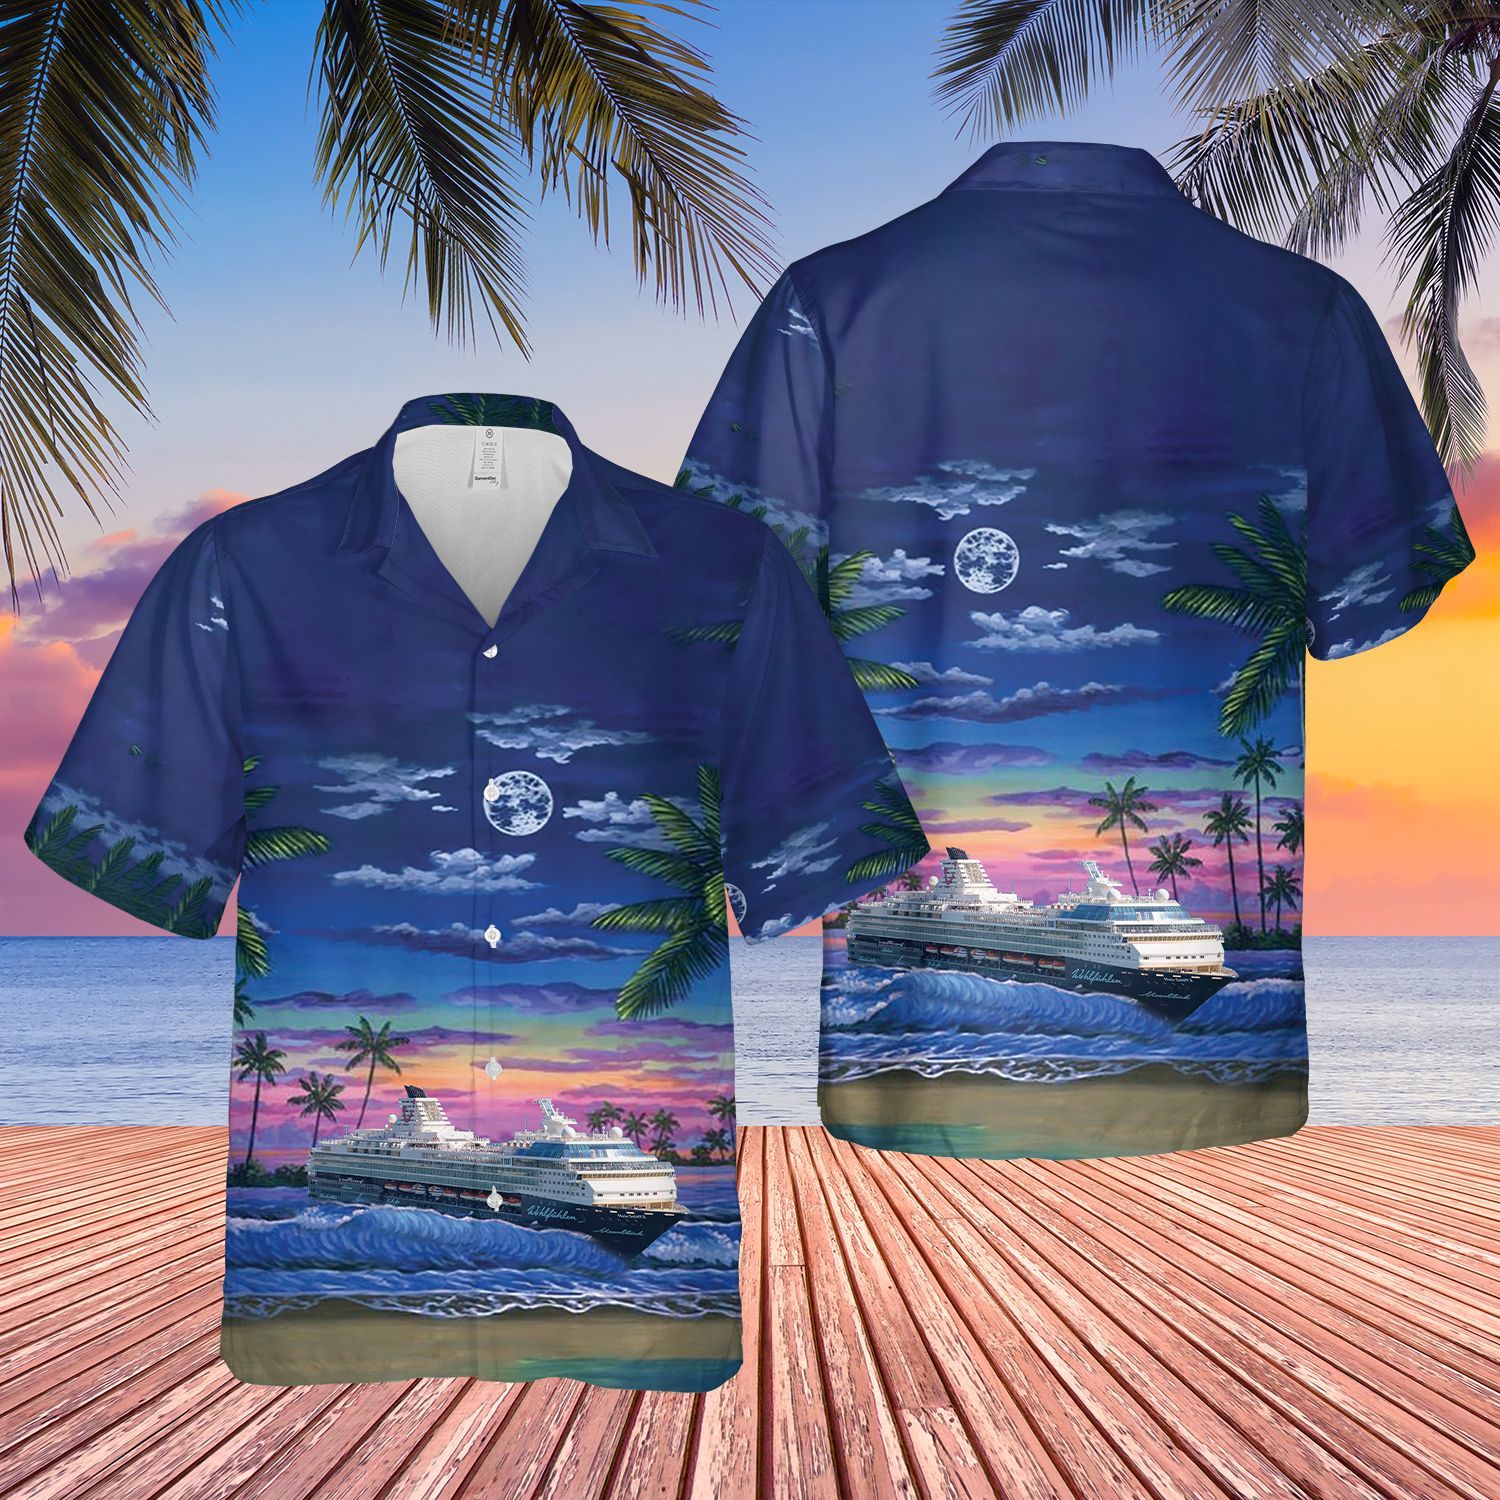 Enjoy your summer with top cool hawaiian shirt below 25